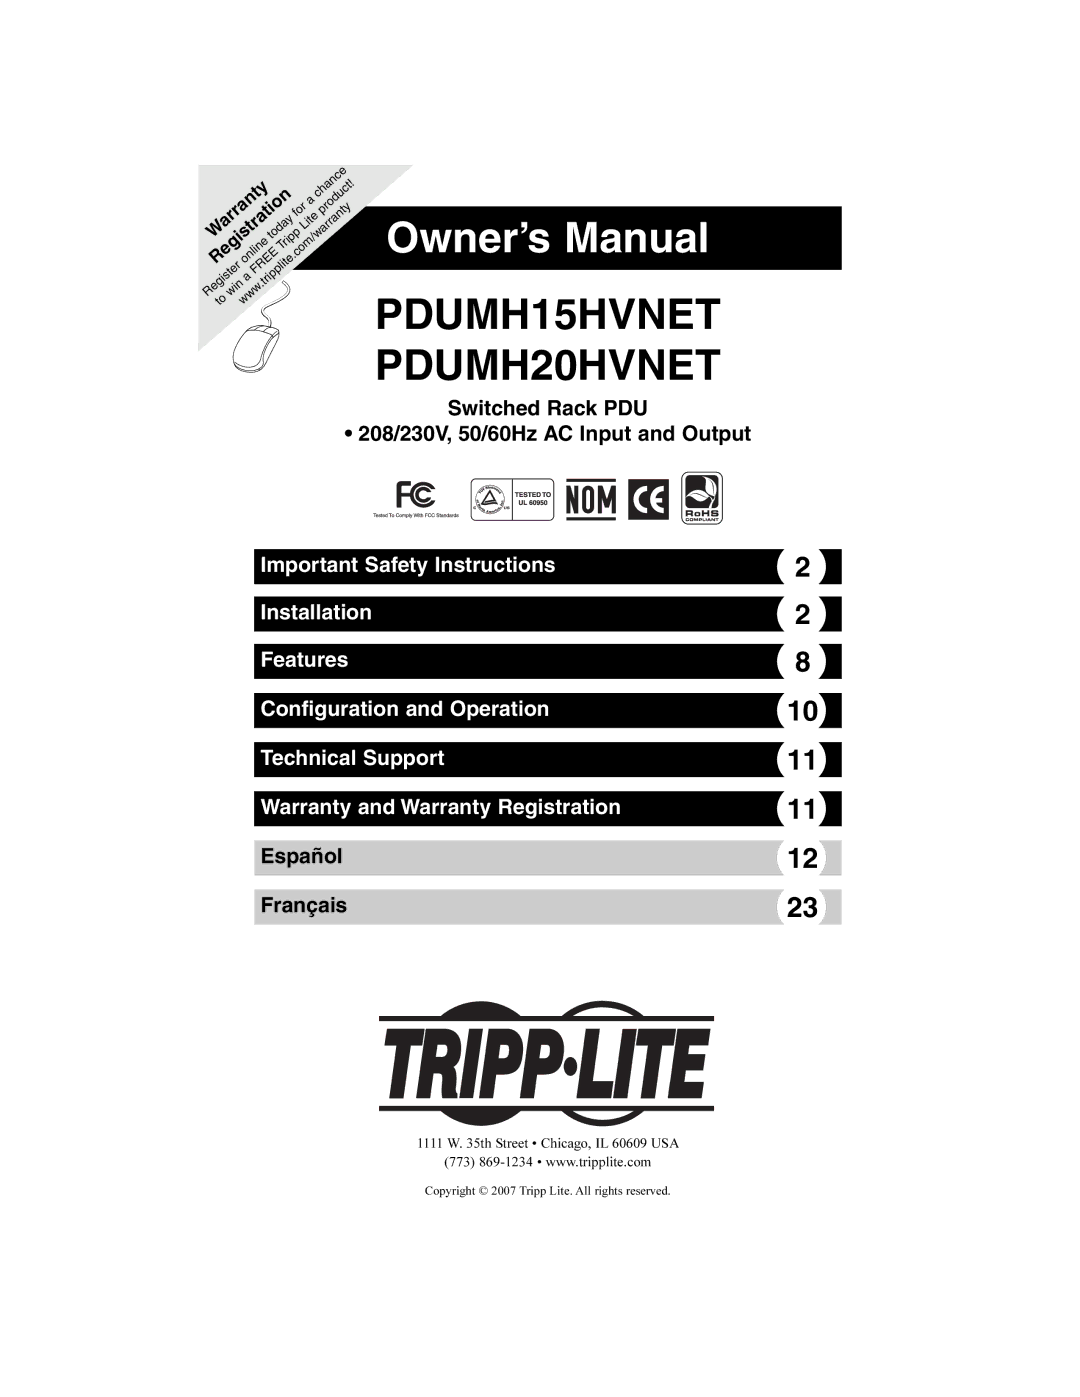 Tripp Lite owner manual PDUMH15HVNET PDUMH20HVNET 